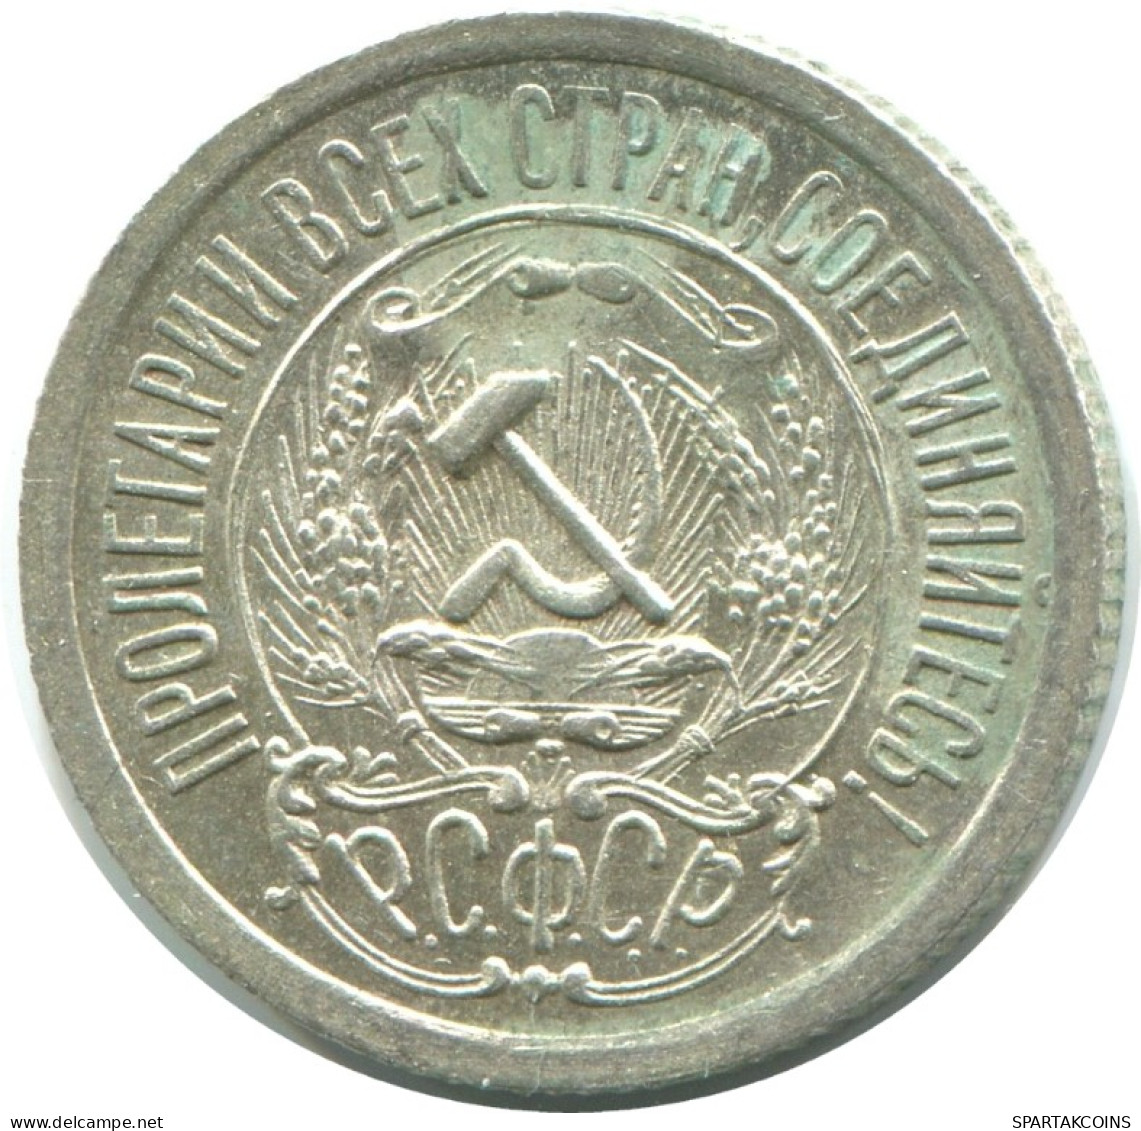 15 KOPEKS 1923 RUSSIA RSFSR SILVER Coin HIGH GRADE #AF170.4.U.A - Russia